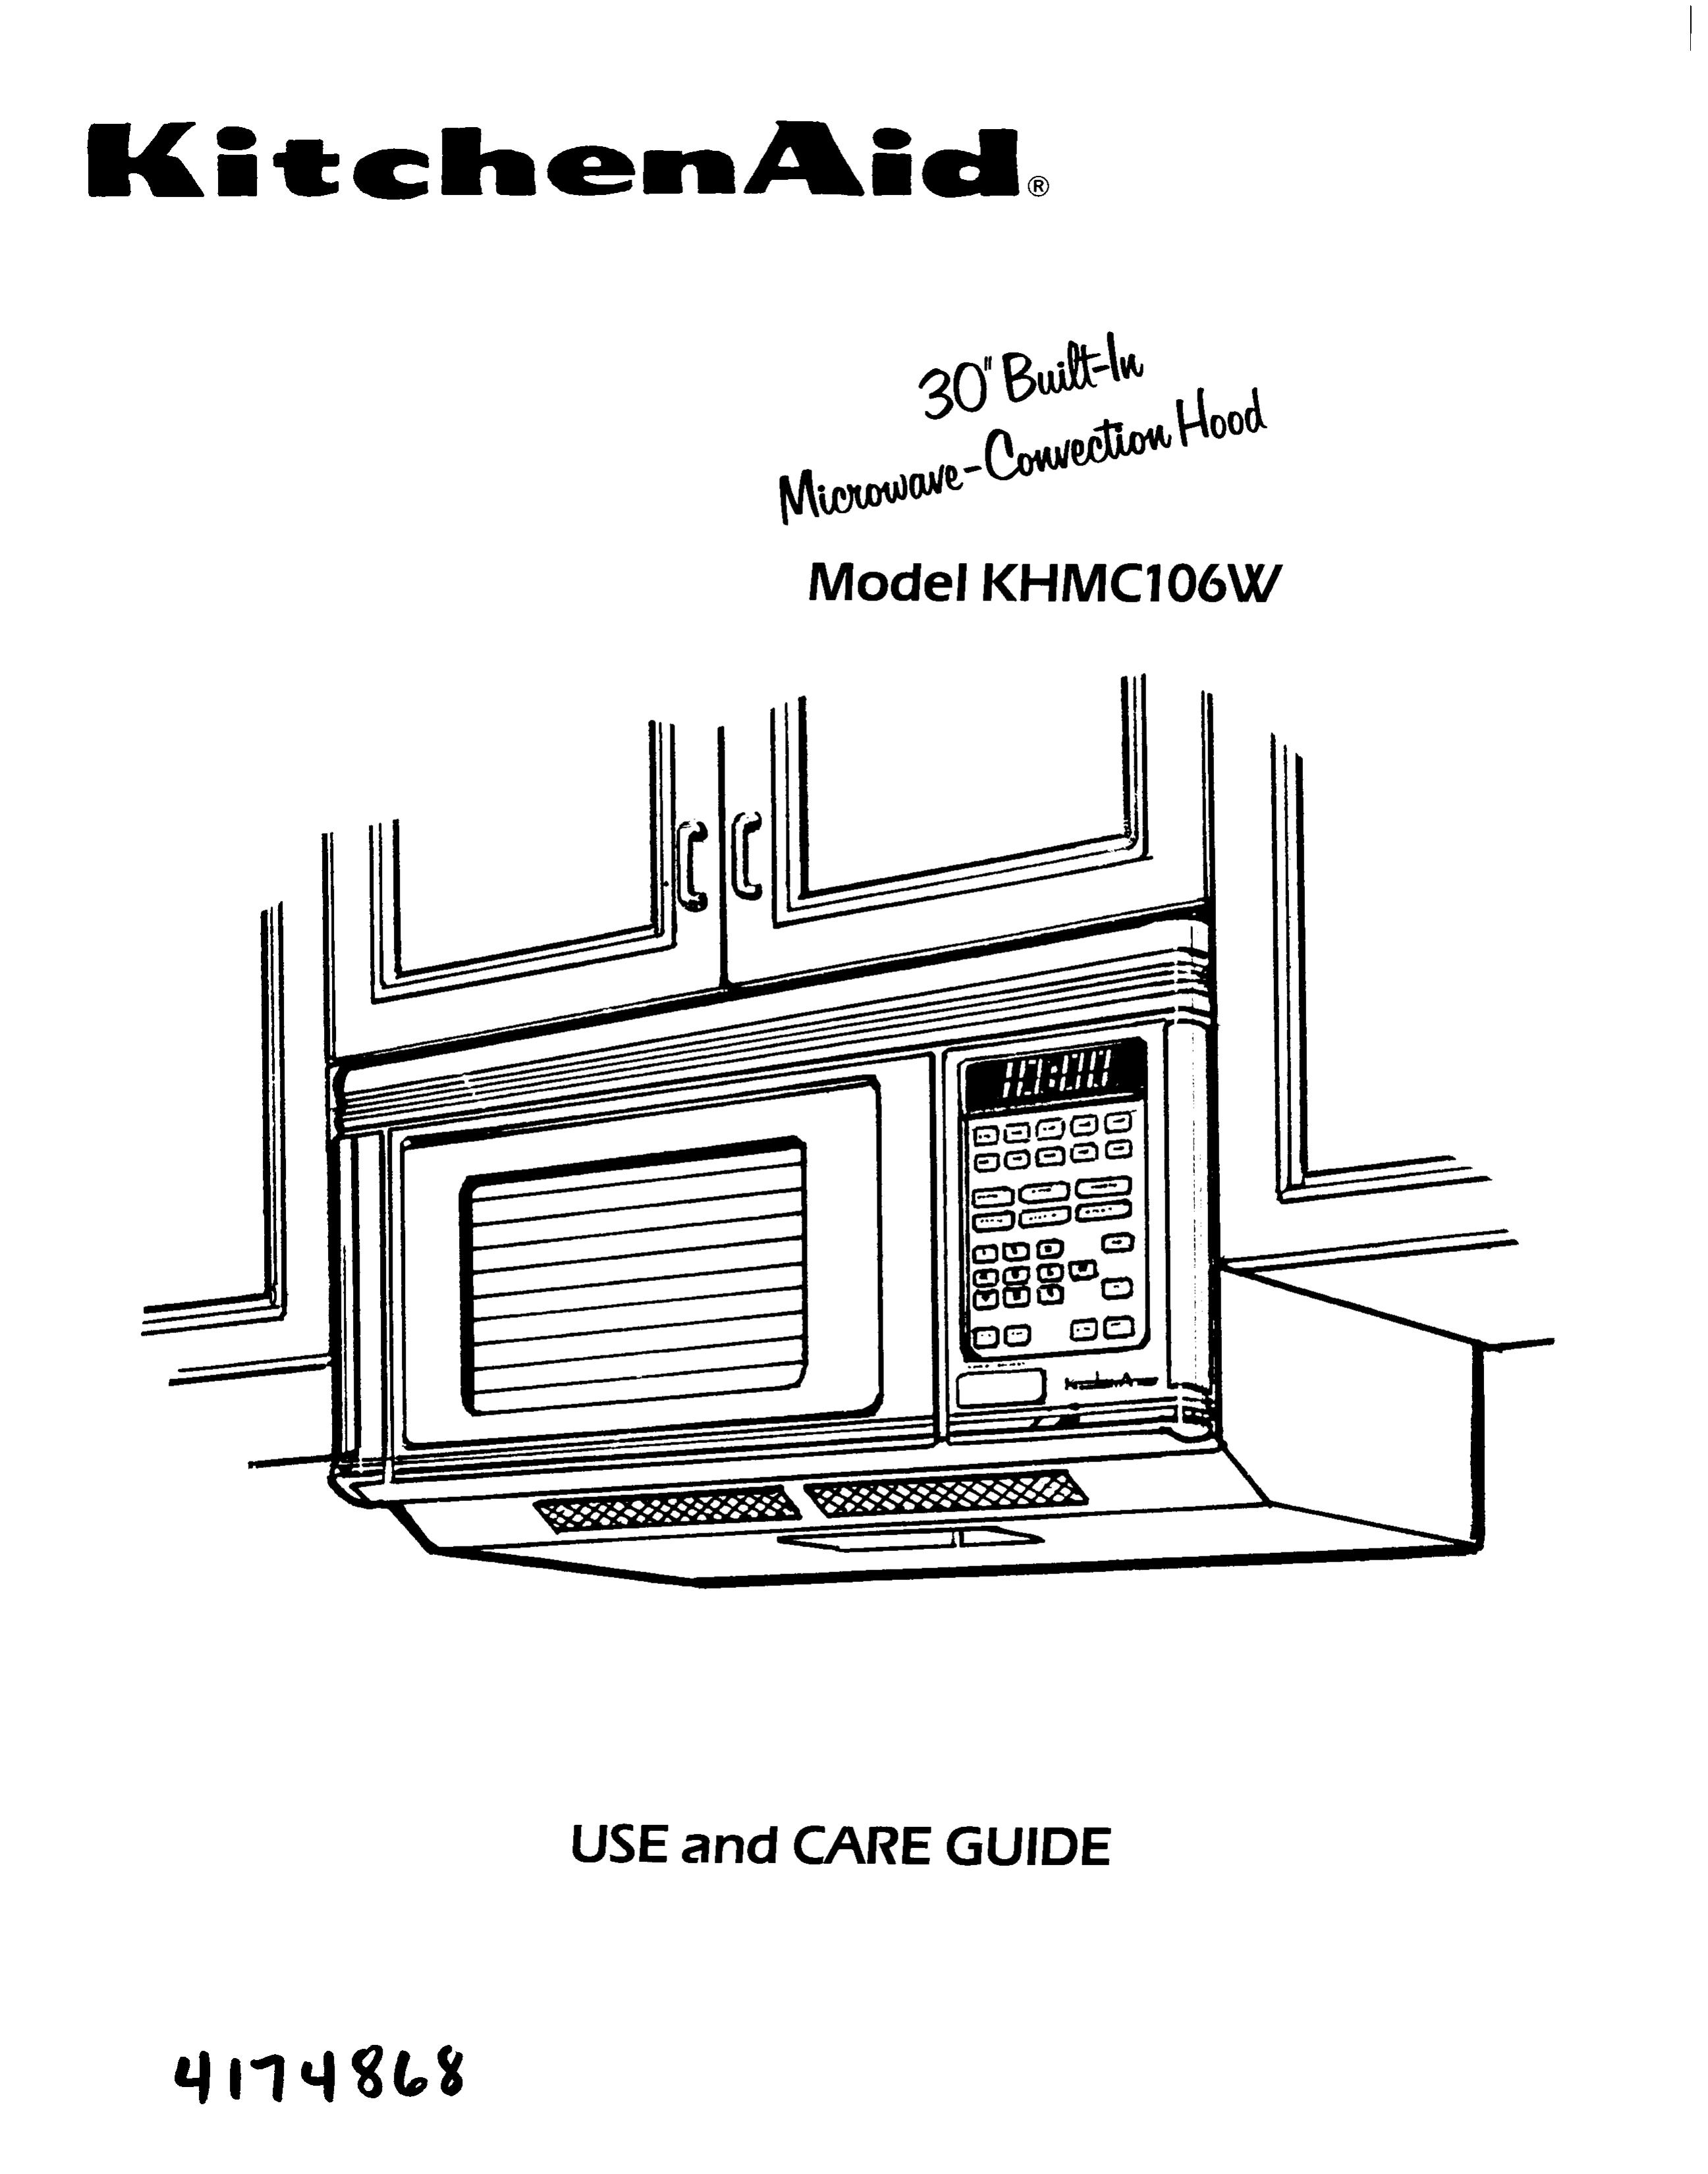 KitchenAid KHMC106W Music Mixer User Manual